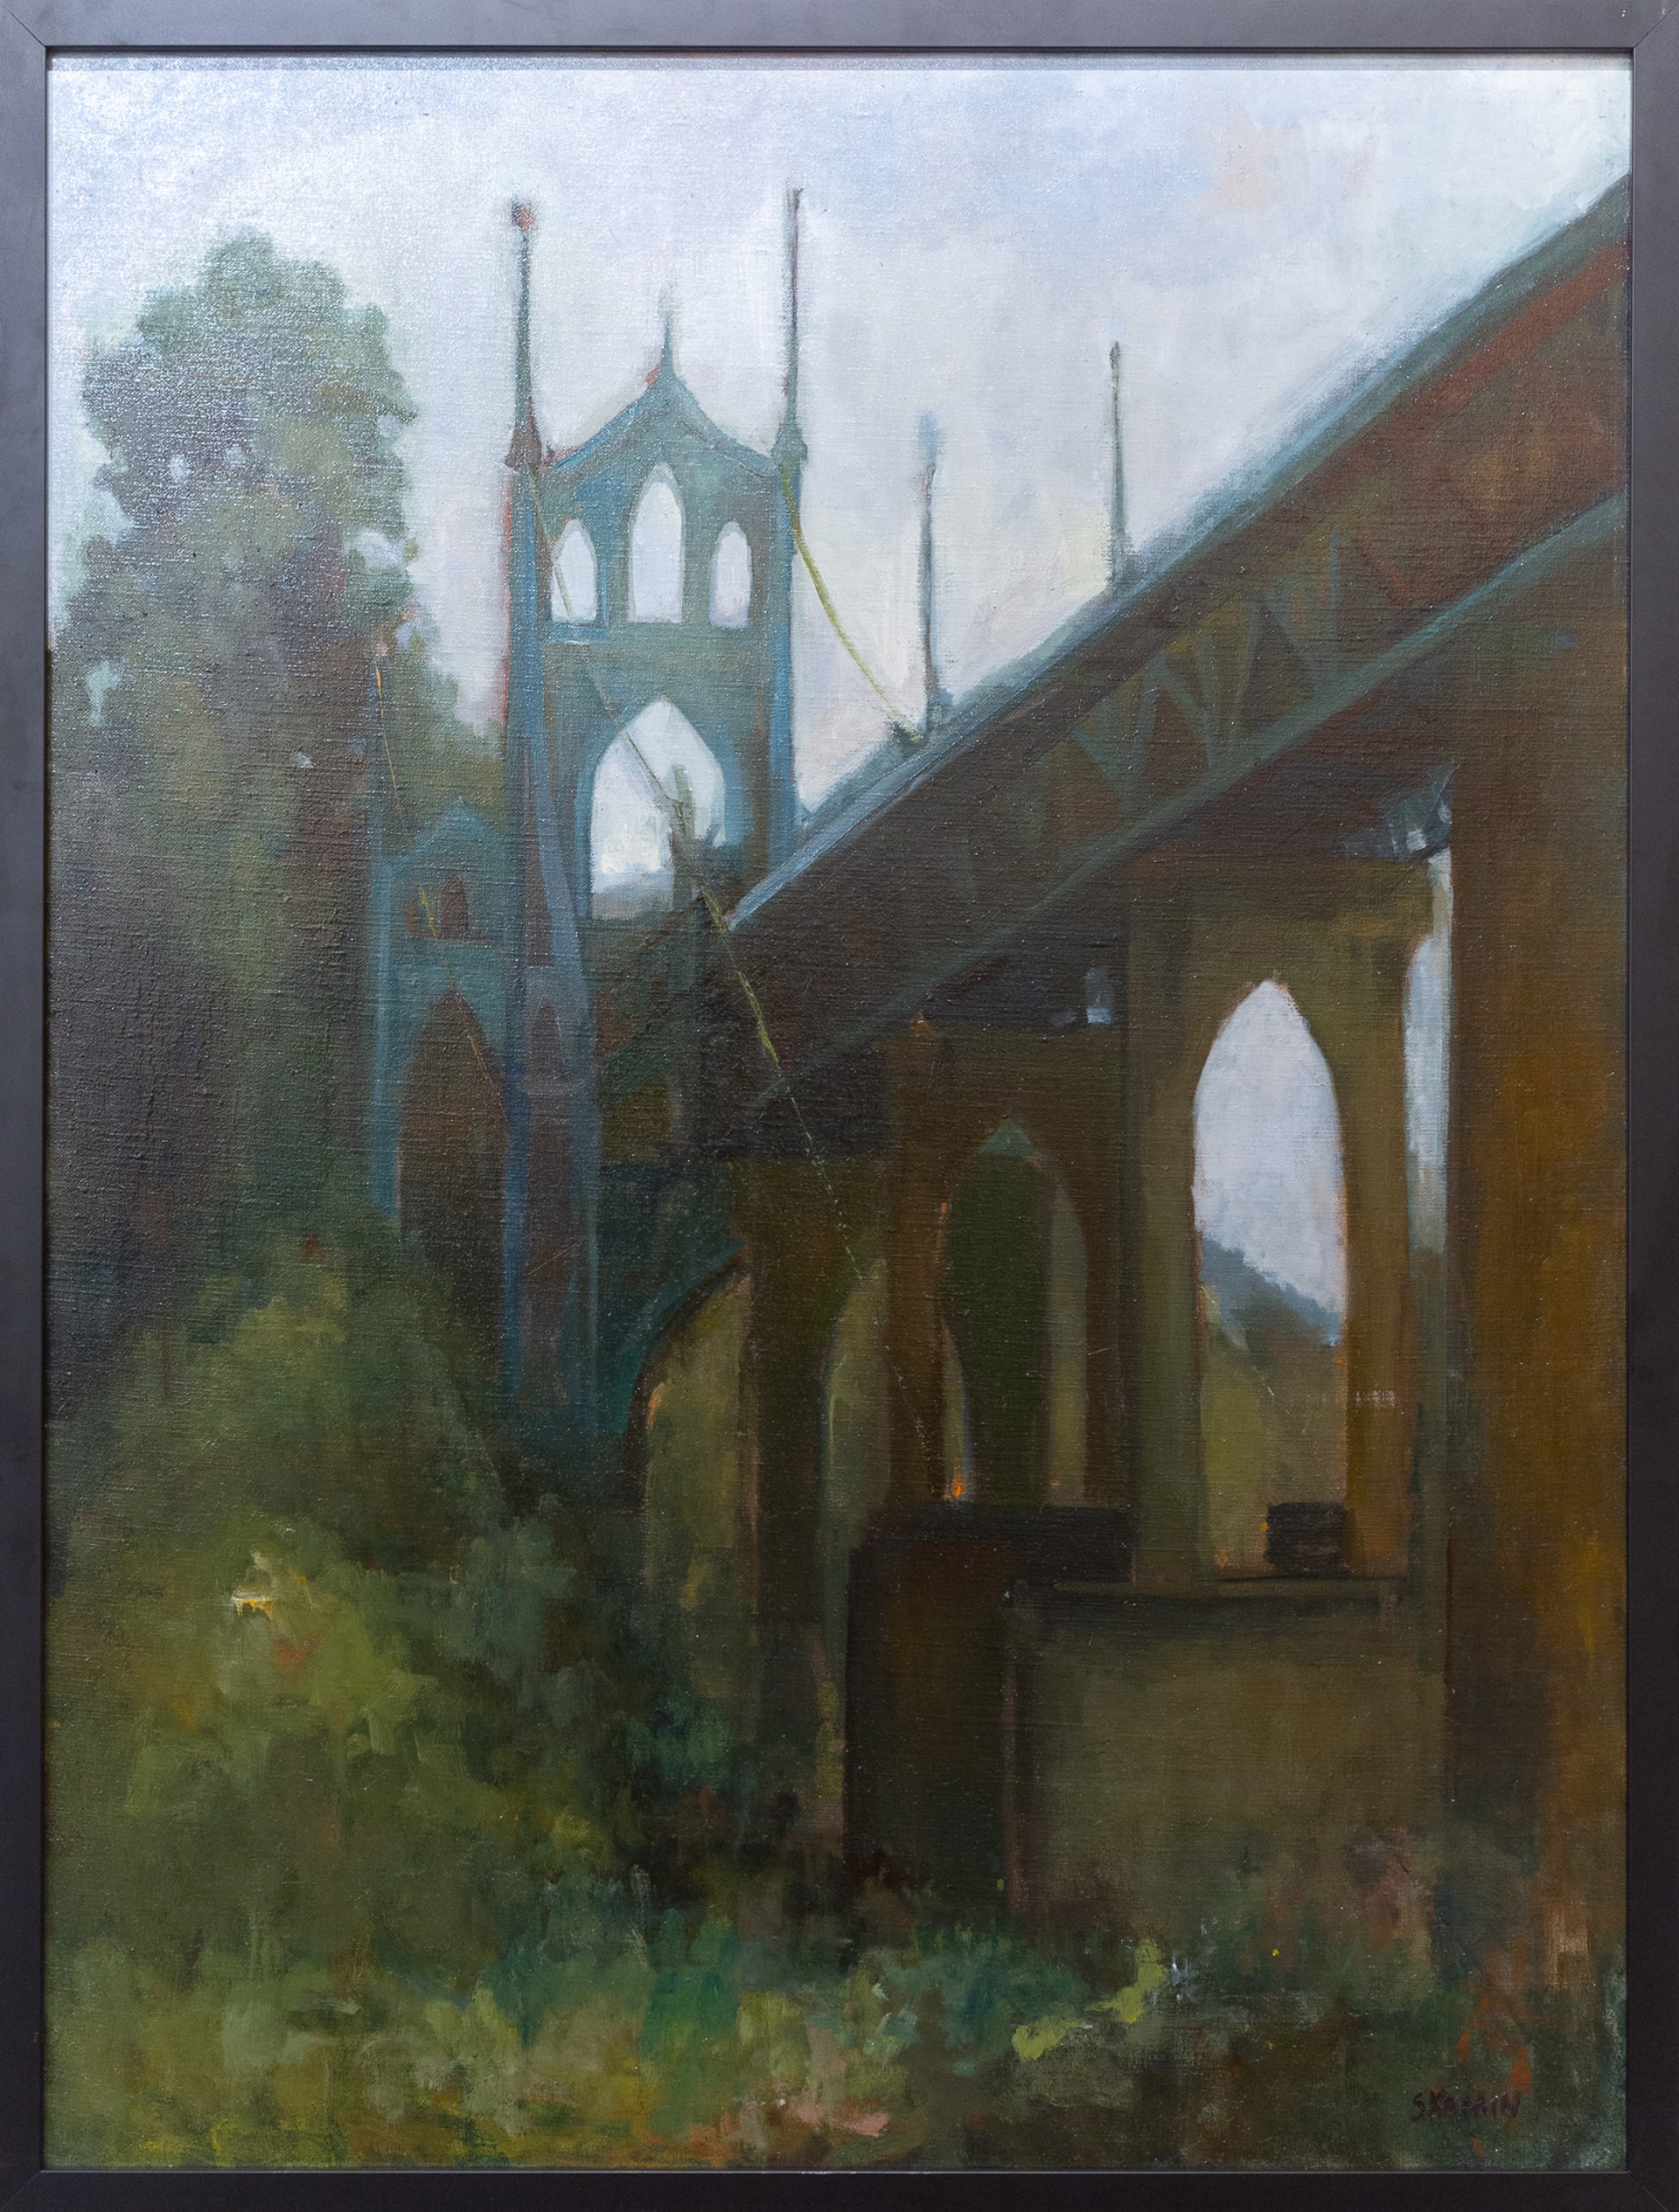 St. John's Bridge by Stacy Kamin